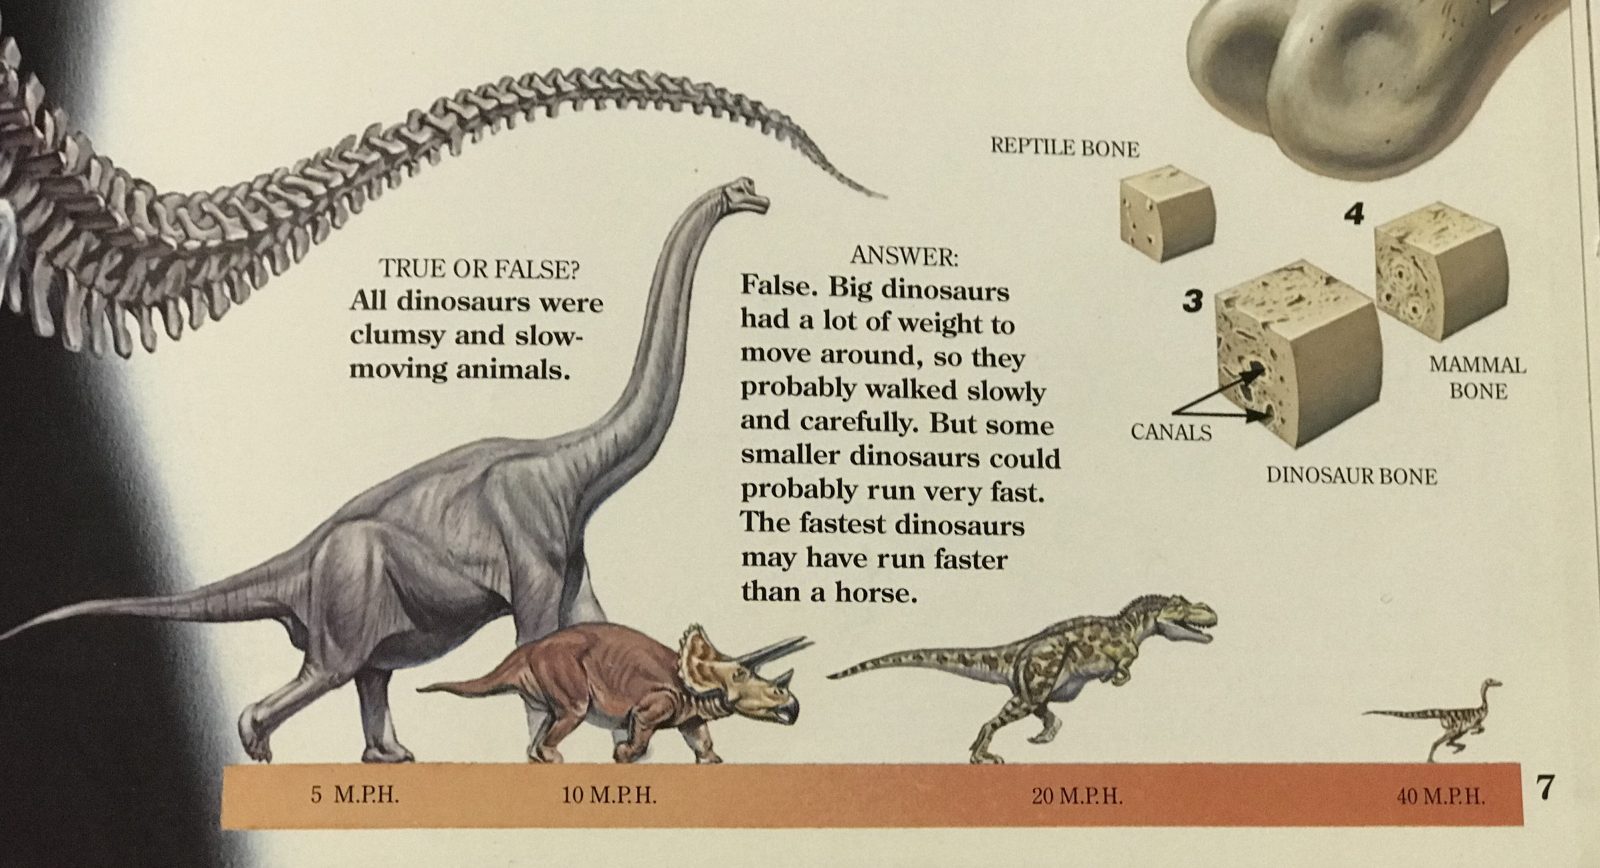 A chart plotting speed estimates of different dinosaurs, featuring Brachiosaurus, Triceratops, Tyrannosaurus, and Ornithomimus.